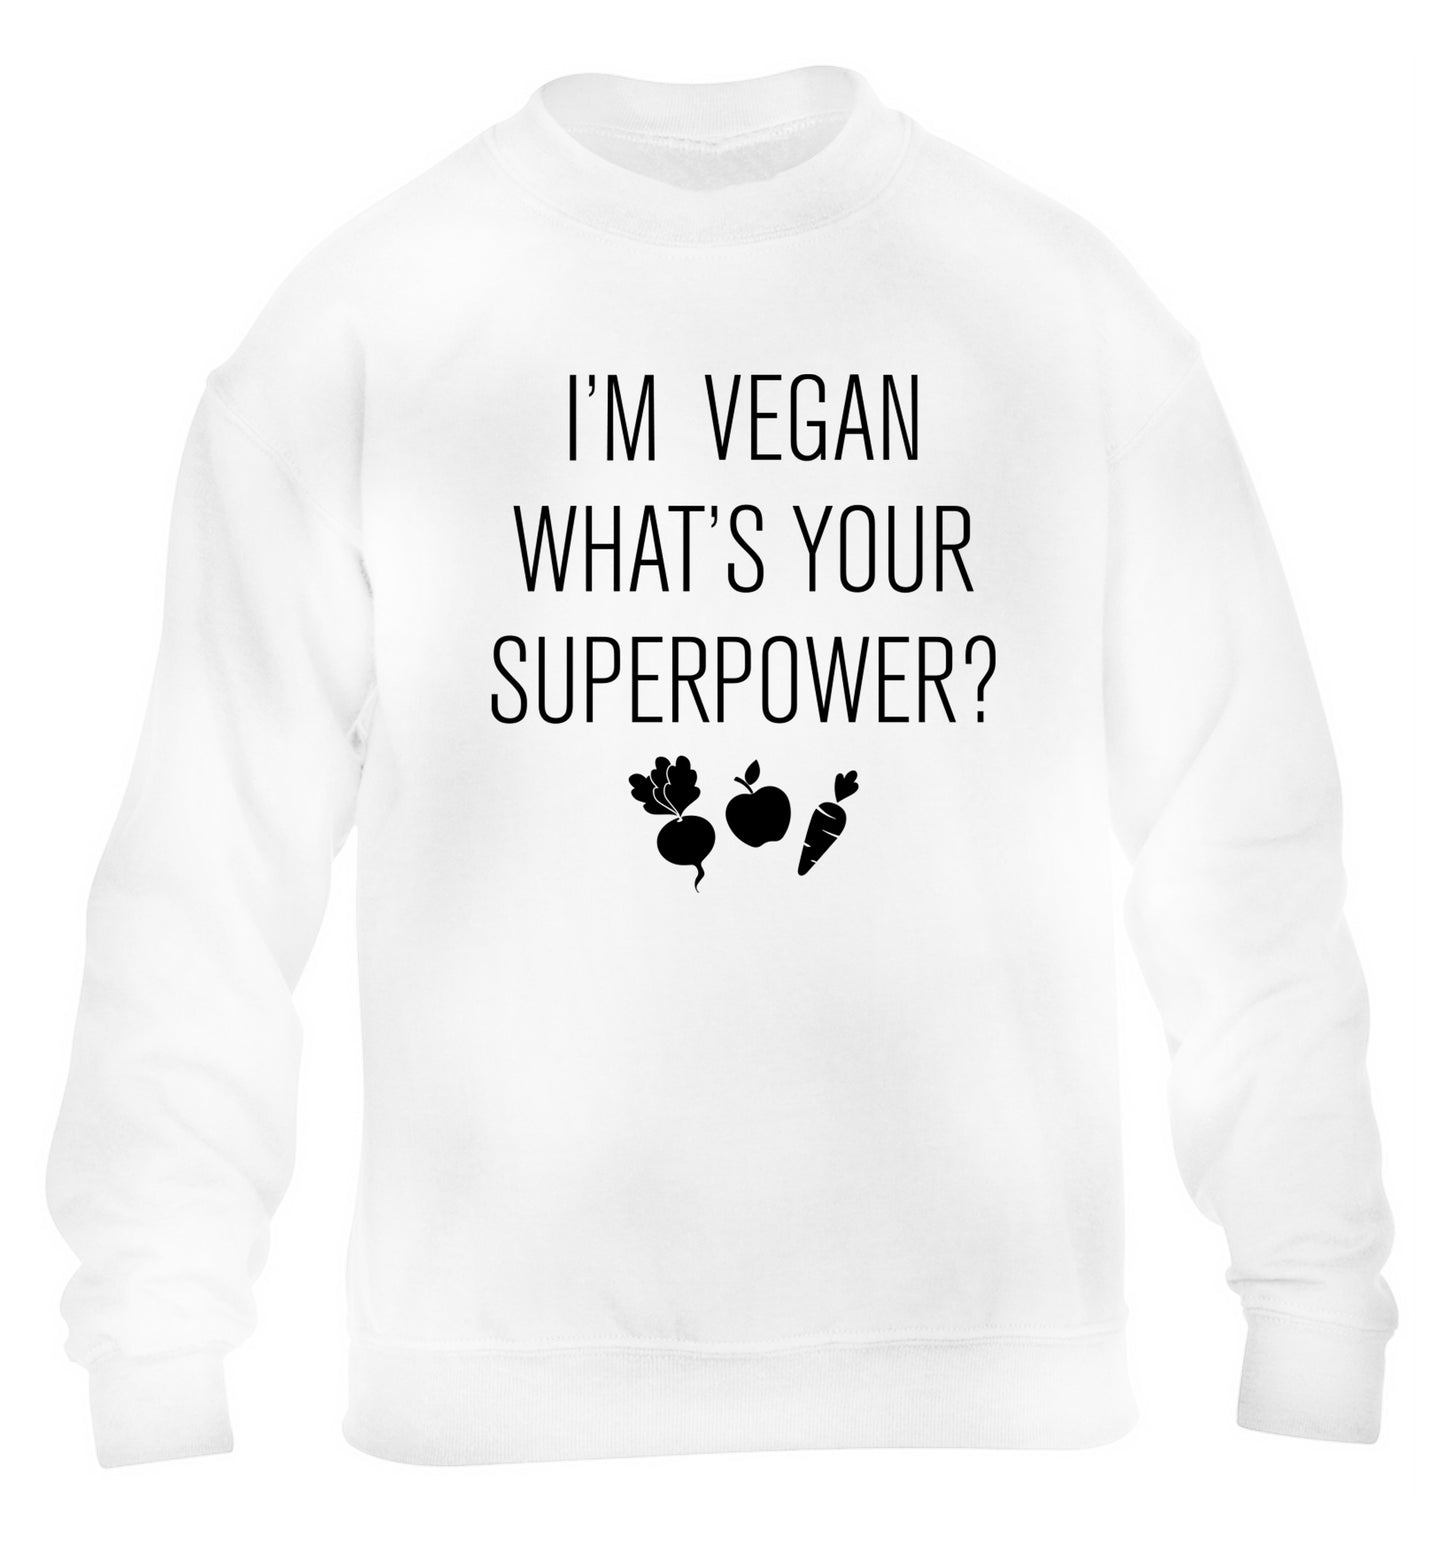 I'm Vegan What's Your Superpower? children's white sweater 12-13 Years